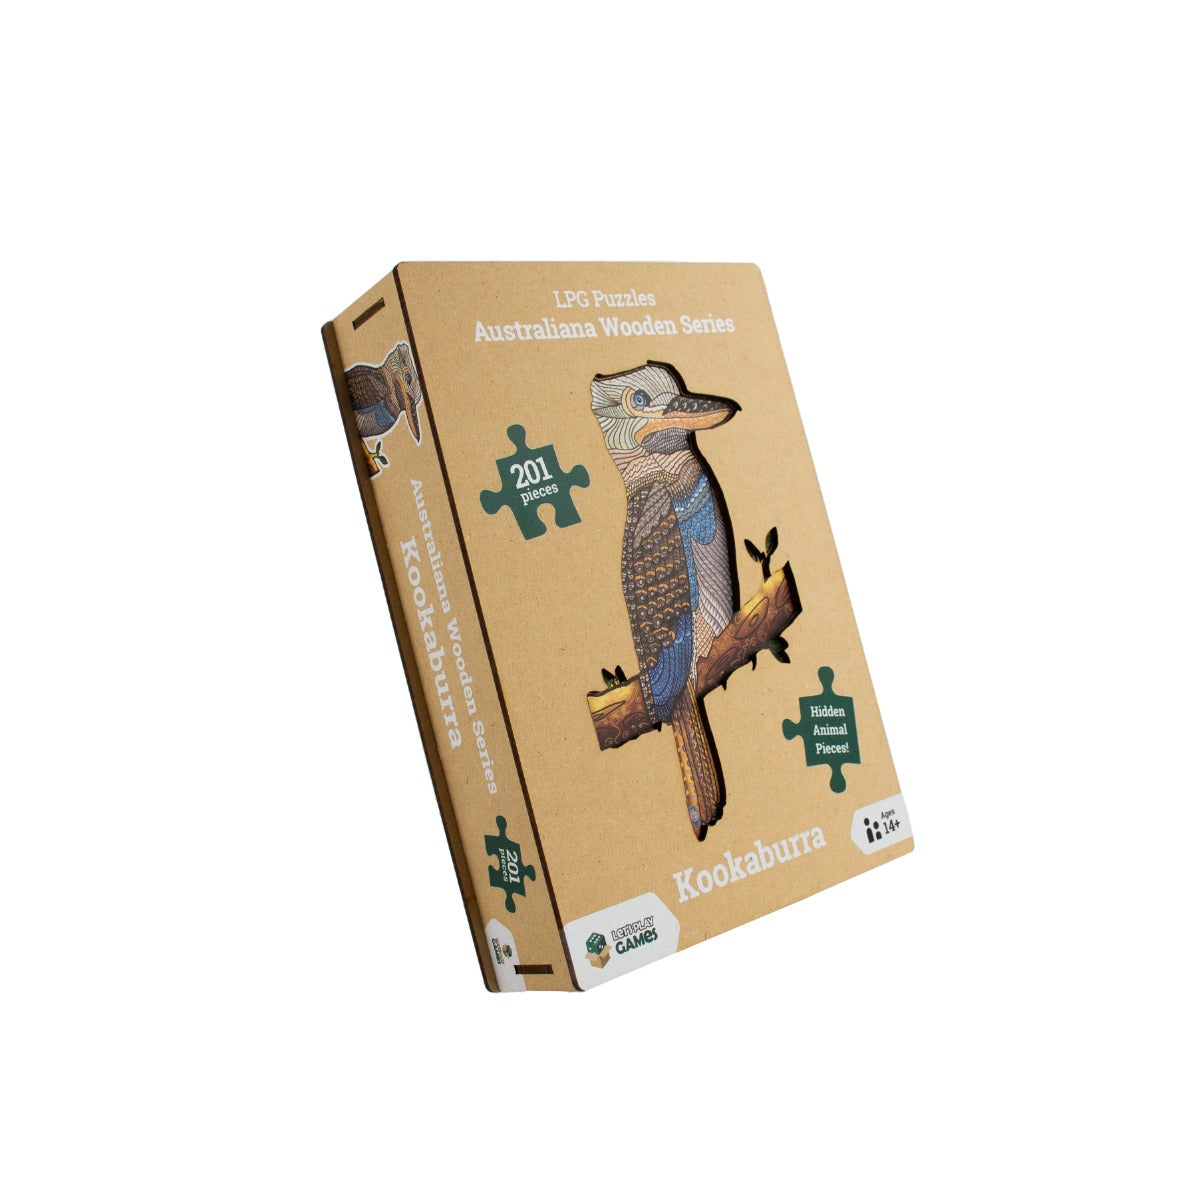 Kookaburra - LPG Wooden Puzzle Australiana Series 01